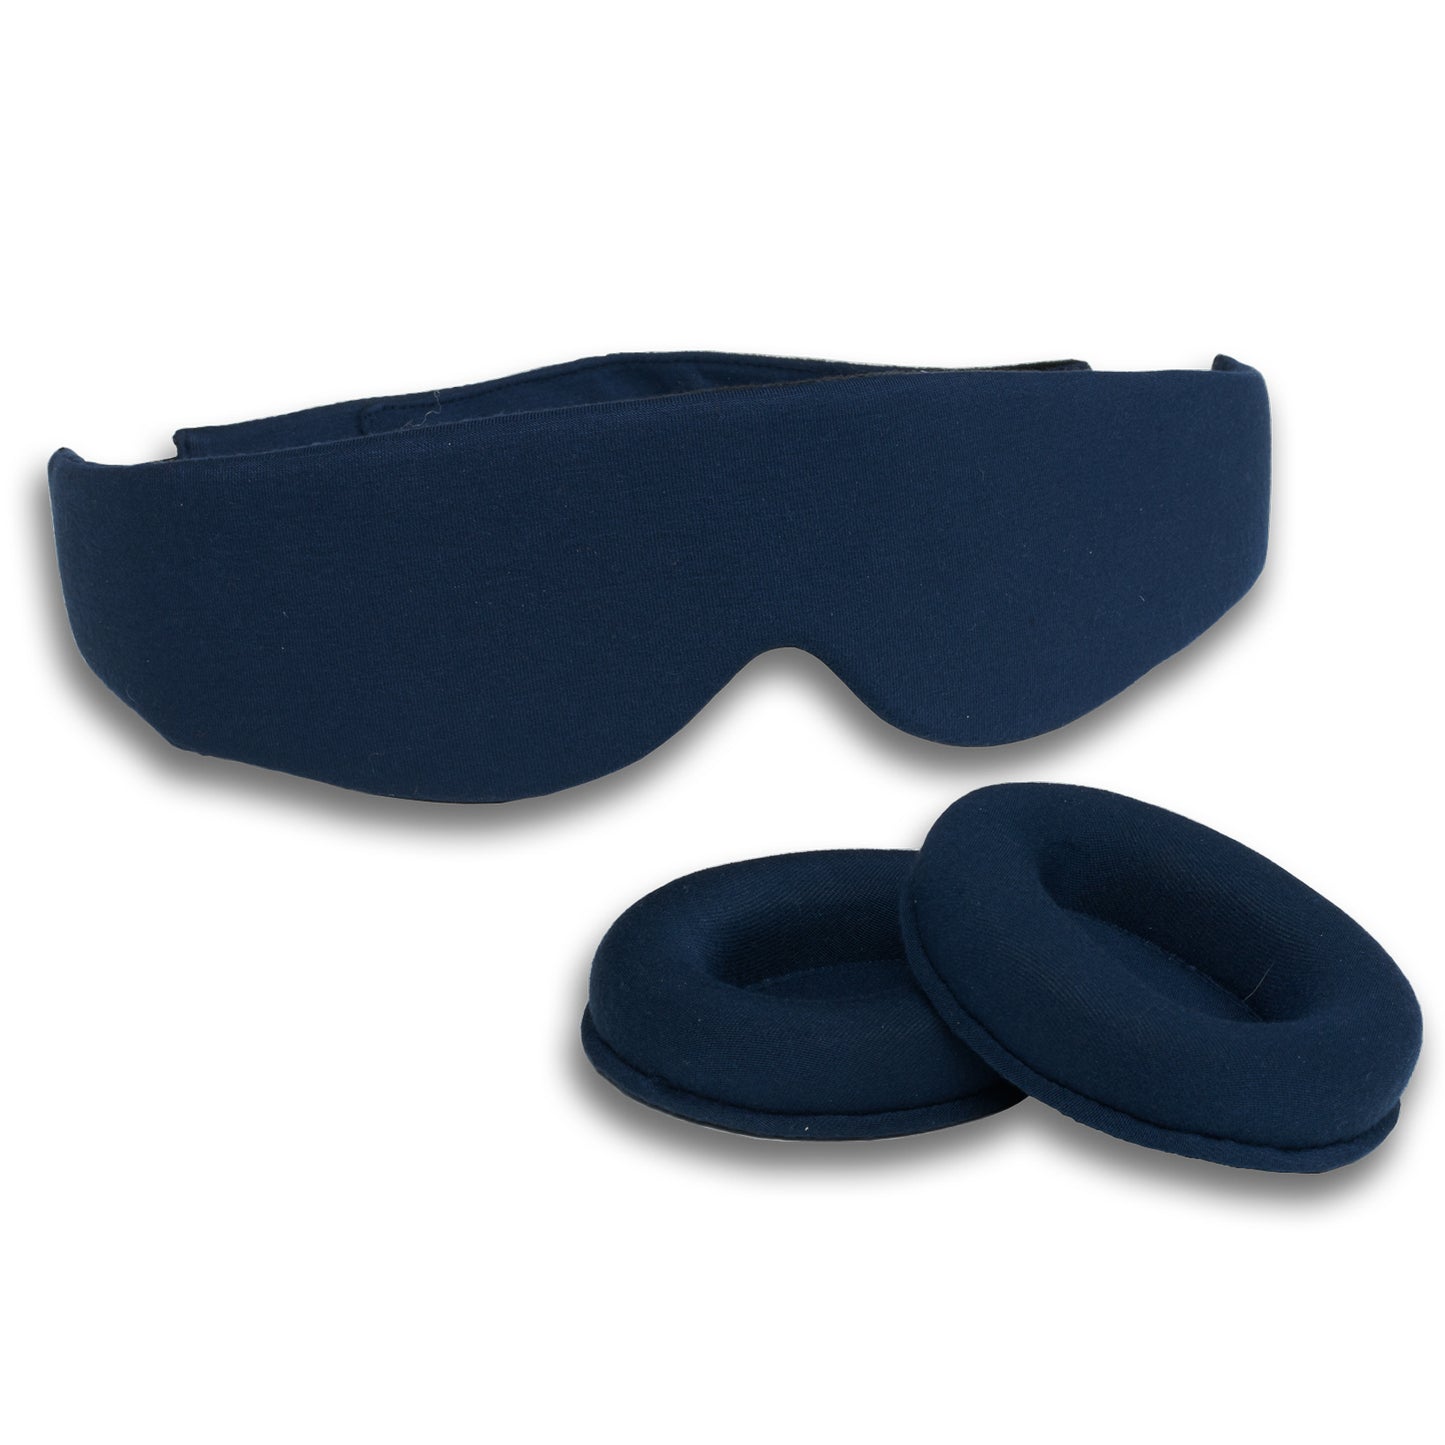 Balance blackout sleep mask pieces || Midnight blue